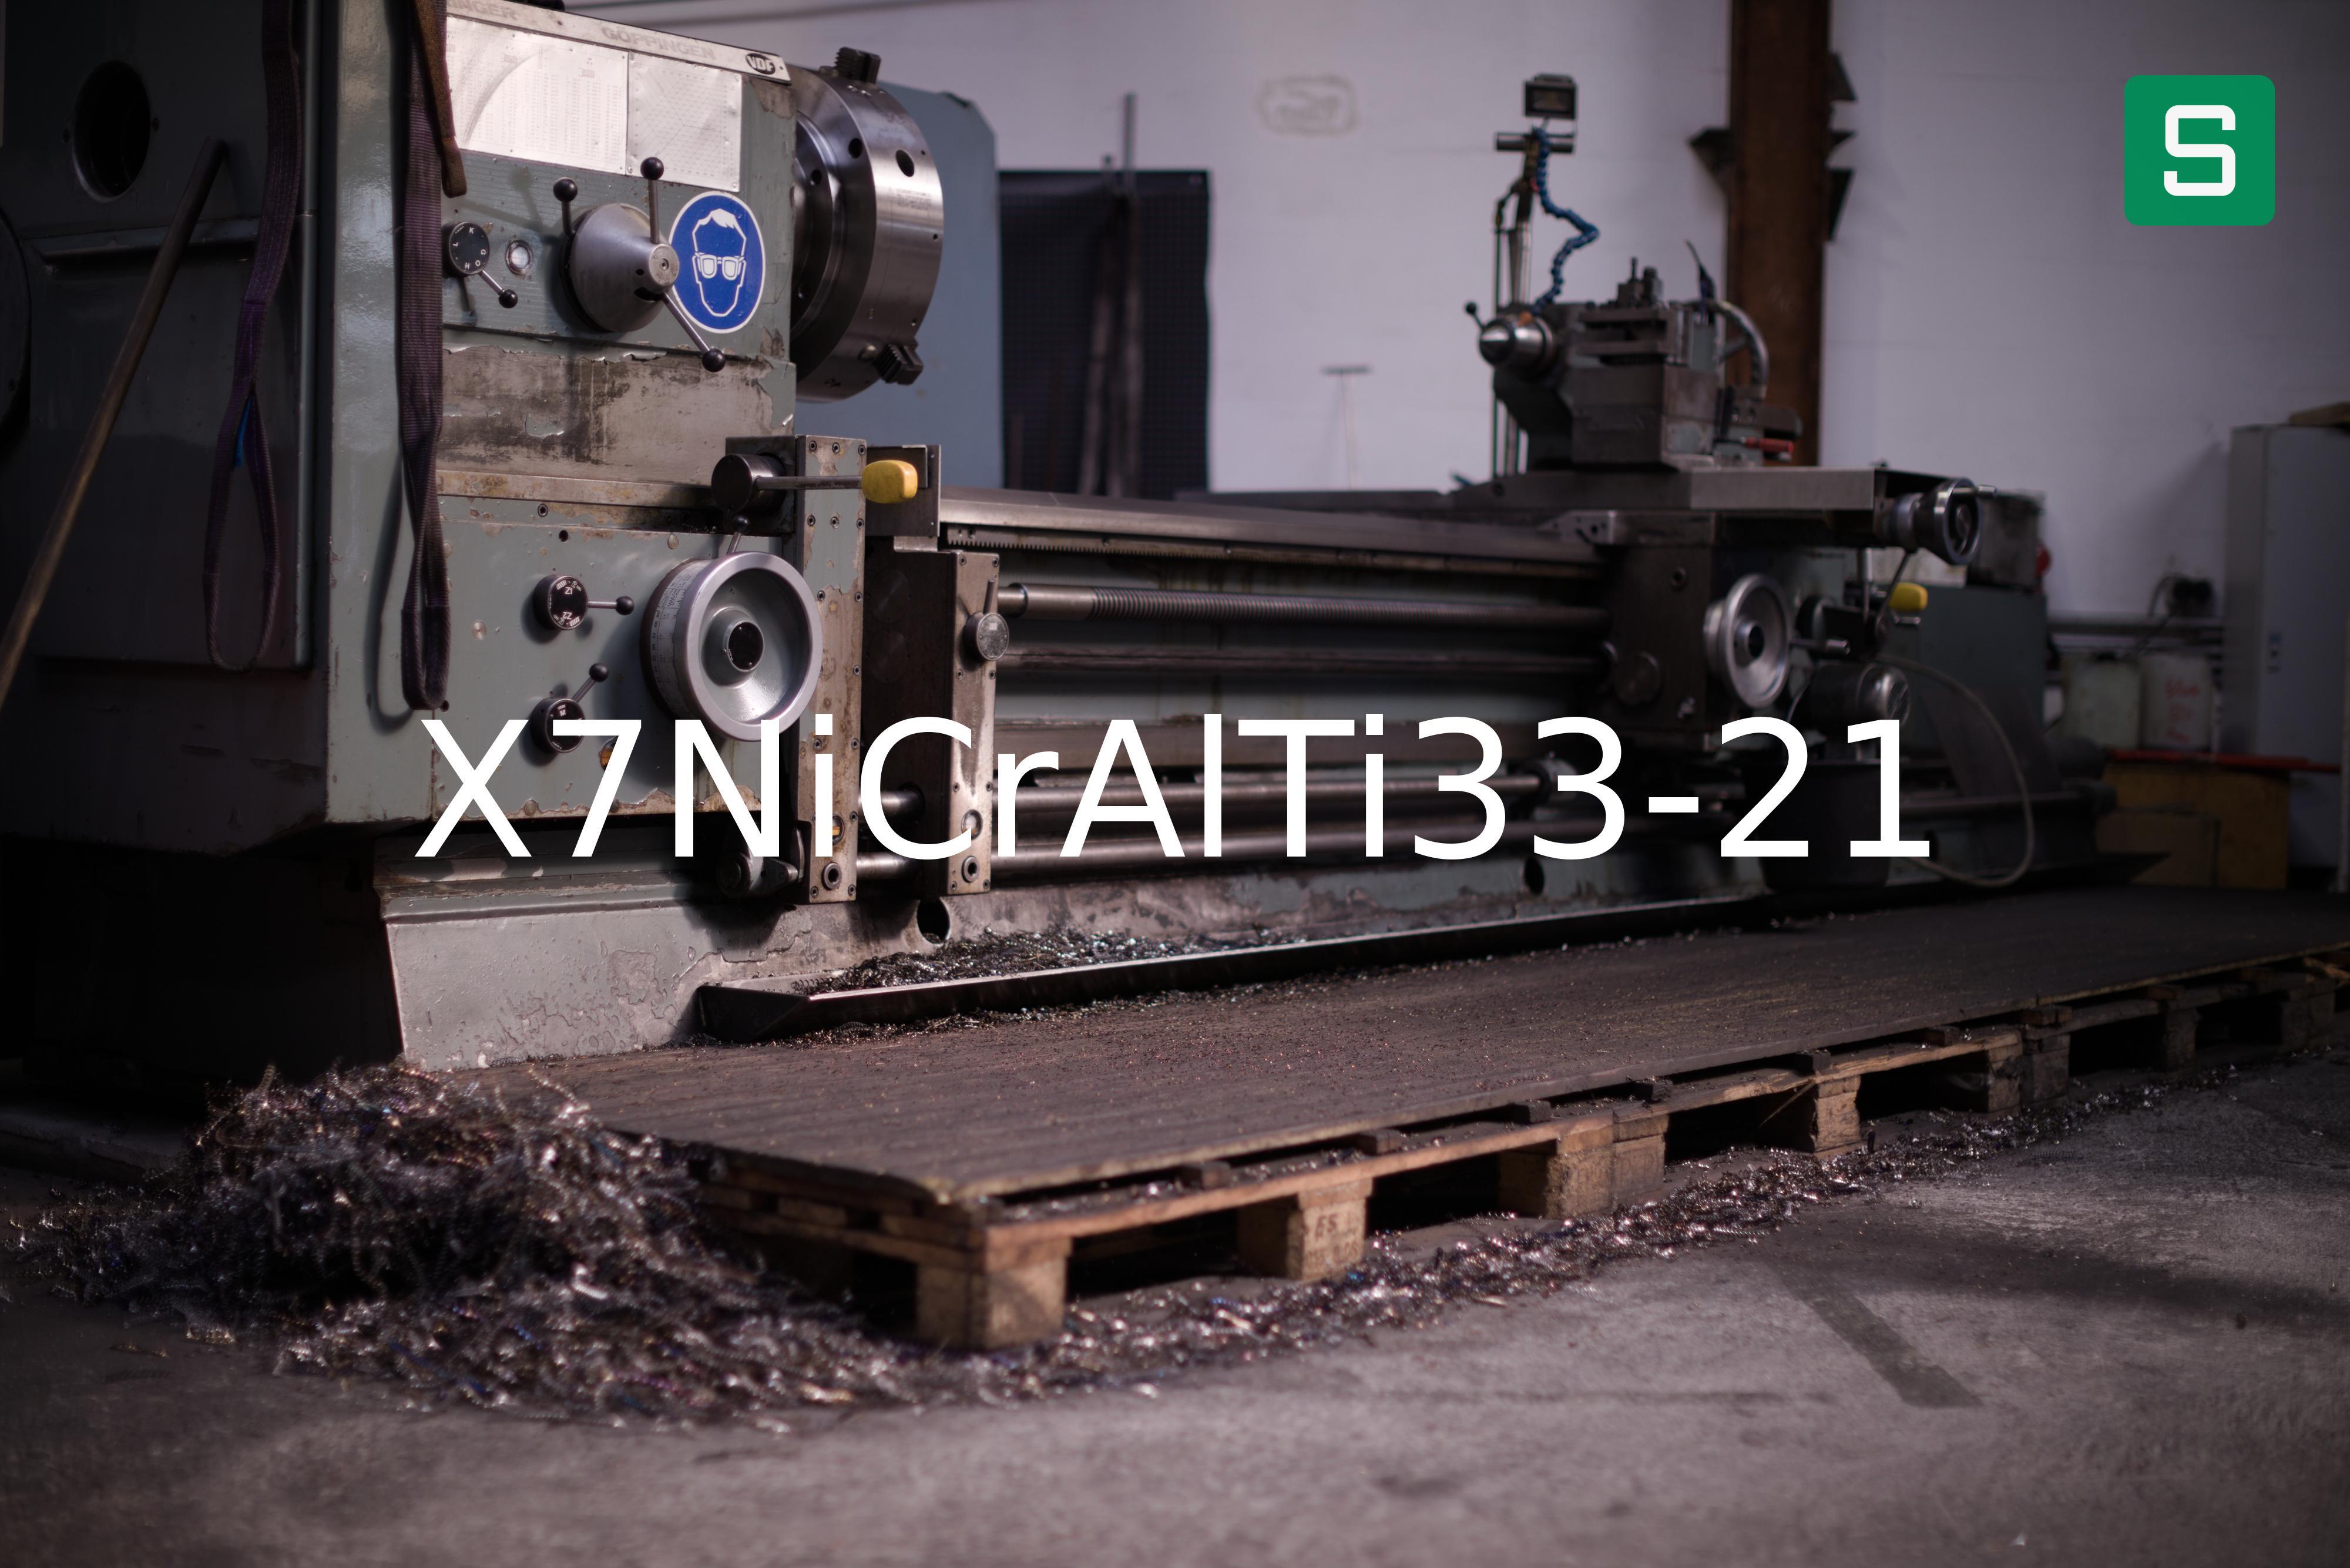 Stahlwerkstoff: X7NiCrAlTi33-21